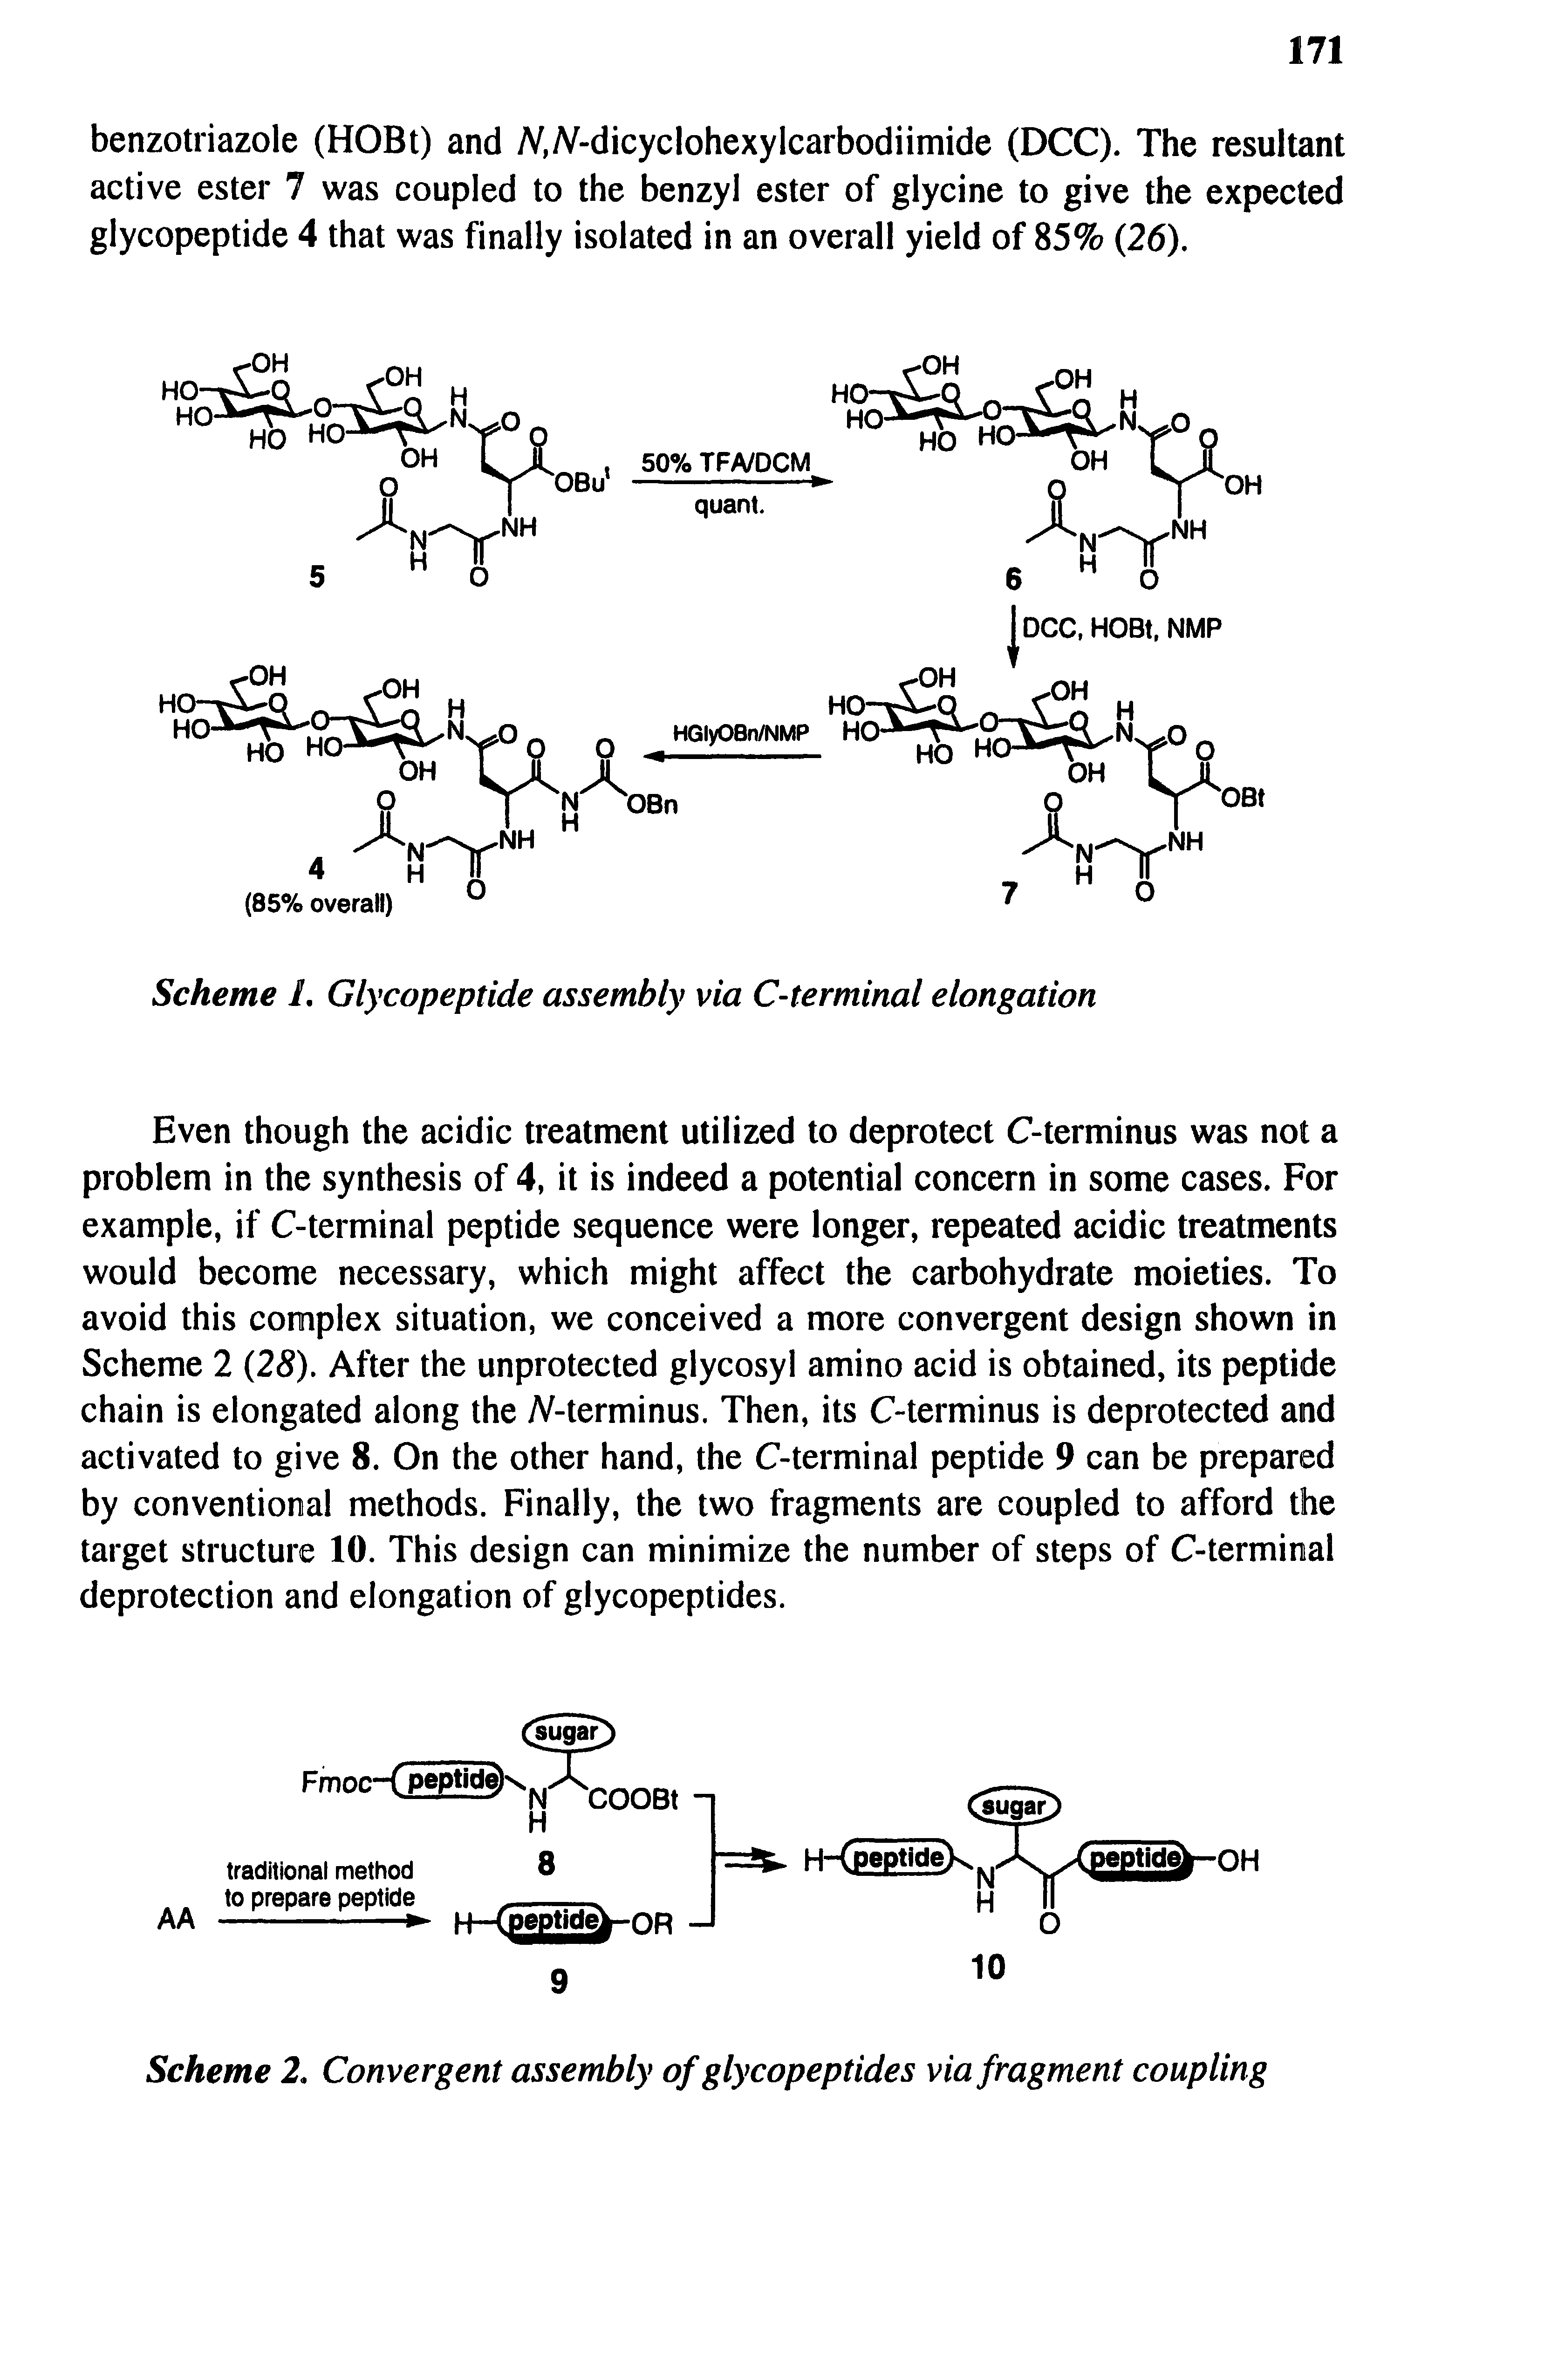 Scheme 2. Convergent assembly of glycopeptides via fragment coupling...